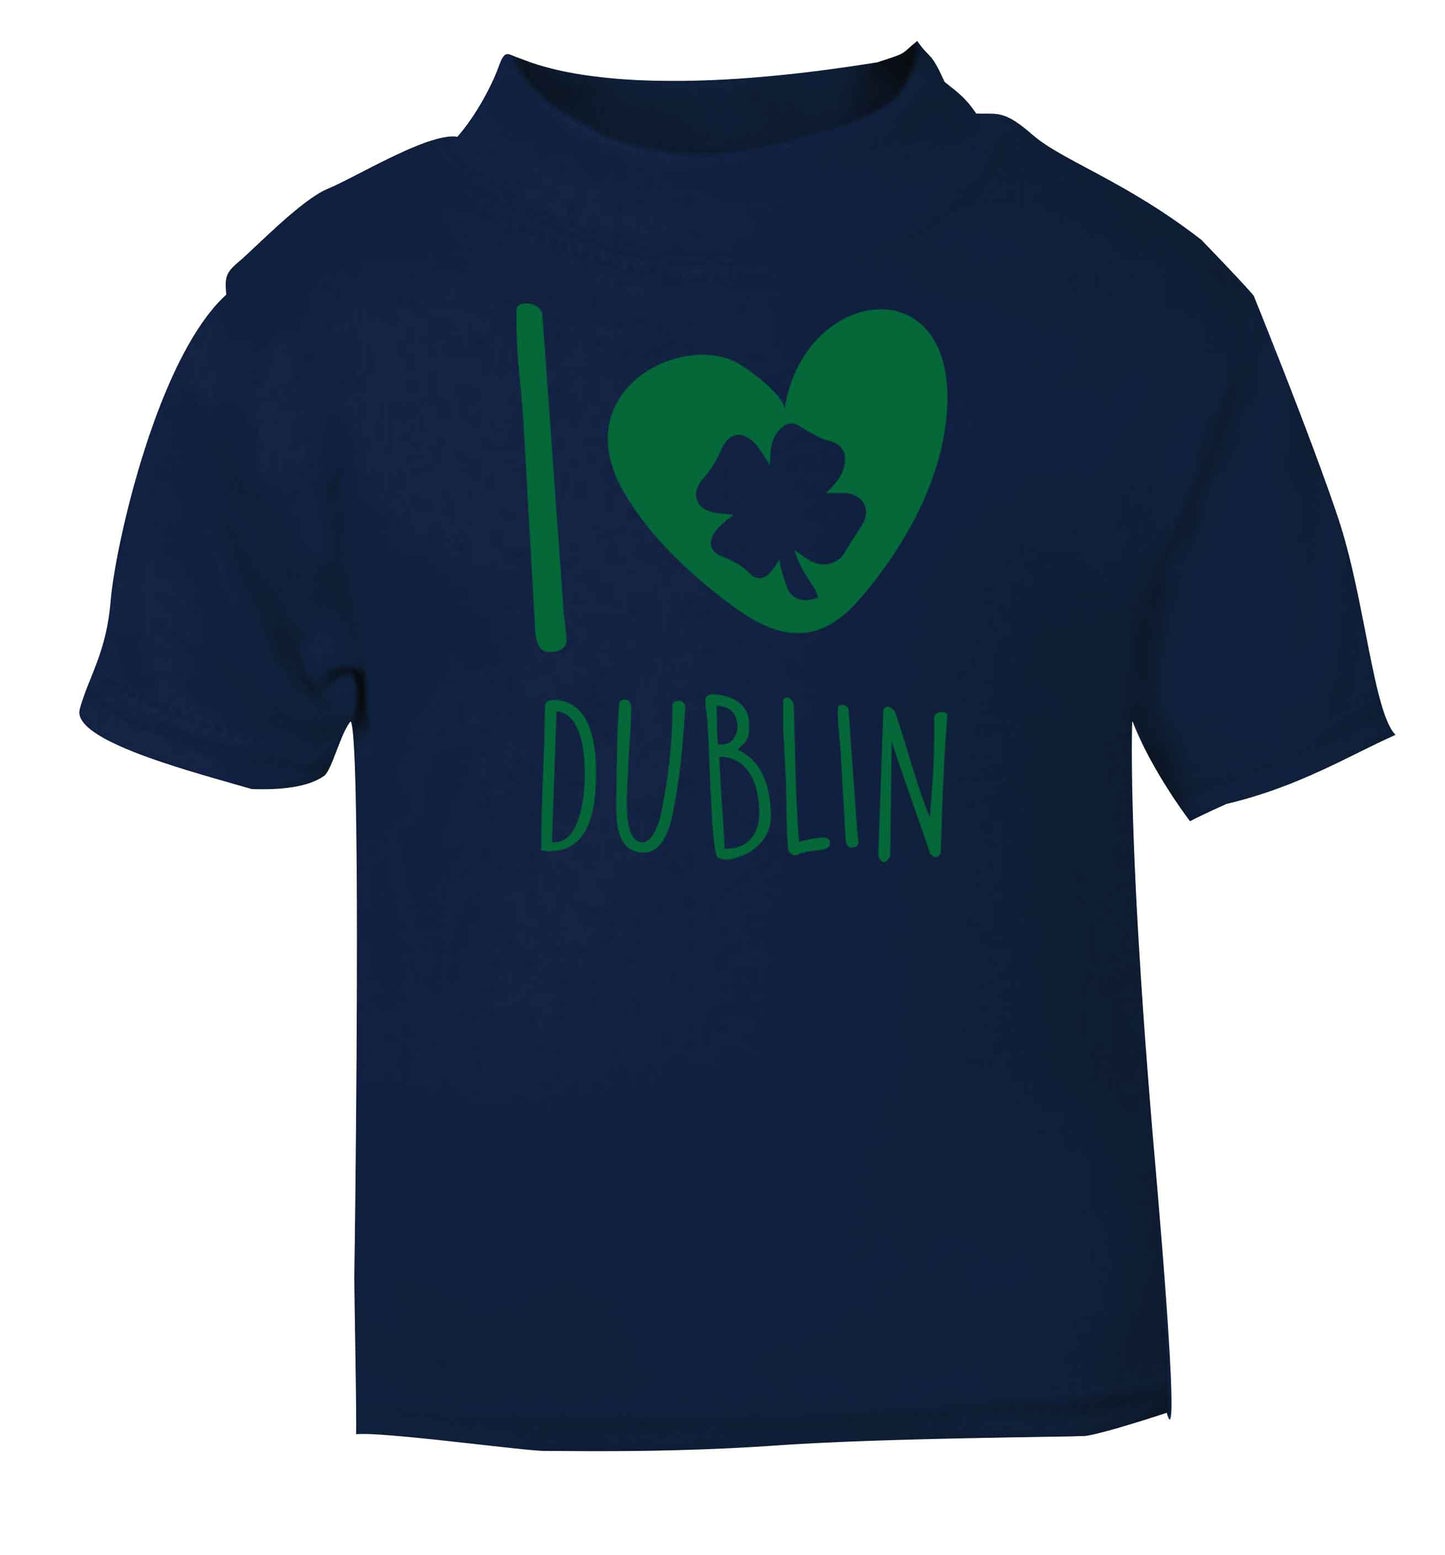 I love Dublin navy baby toddler Tshirt 2 Years